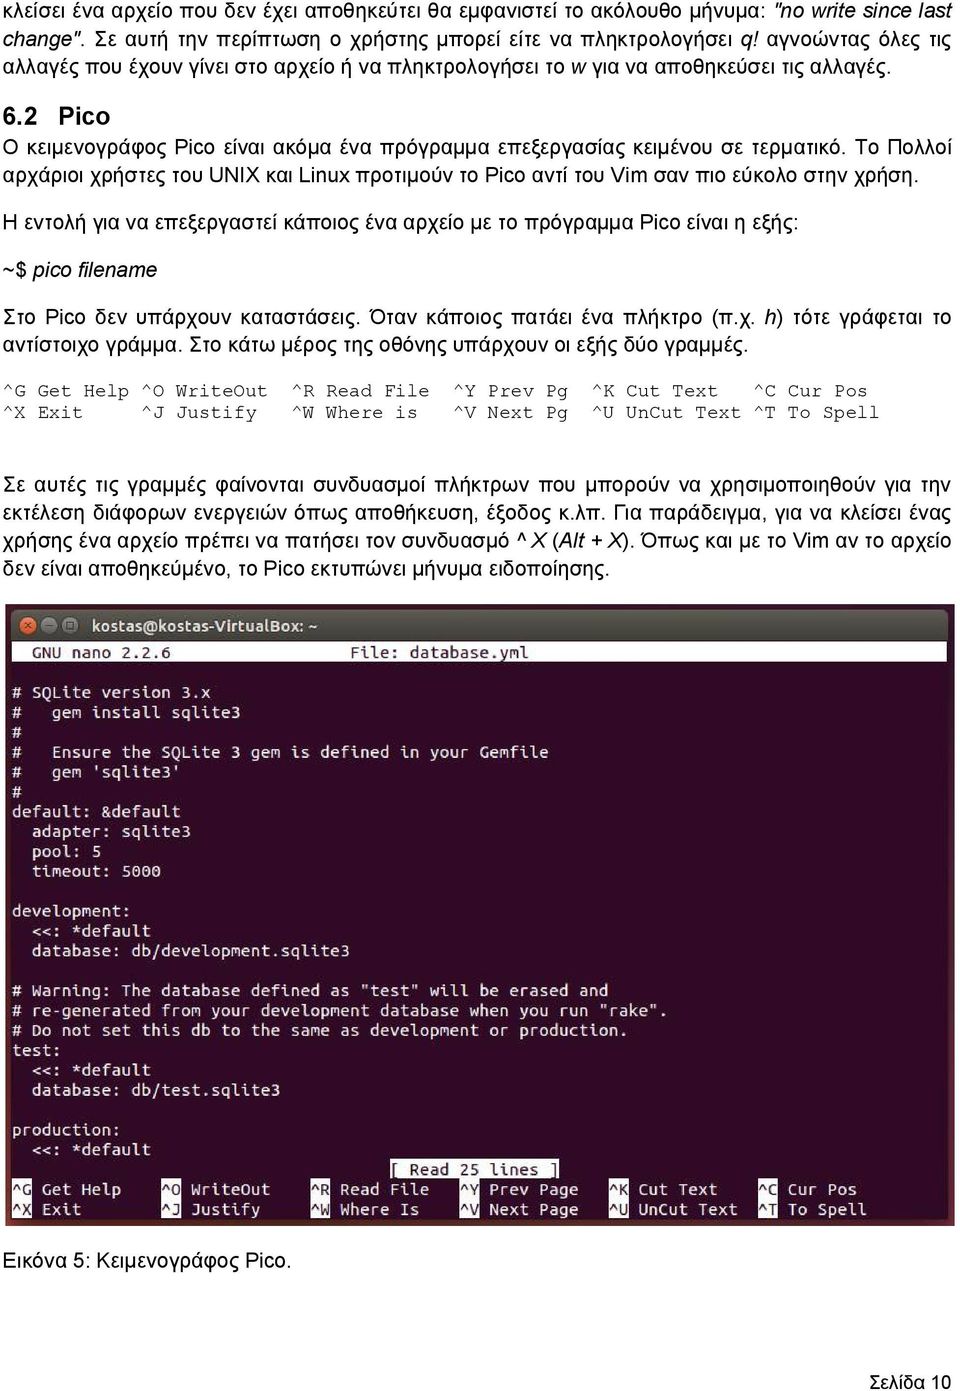 2 Pico Ο κειμενογράφος Pico είναι ακόμα ένα πρόγραμμα επεξεργασίας κειμένου σε τερματικό. Το Πολλοί αρχάριοι χρήστες του UNIX και Linux προτιμούν το Pico αντί του Vim σαν πιο εύκολο στην χρήση.